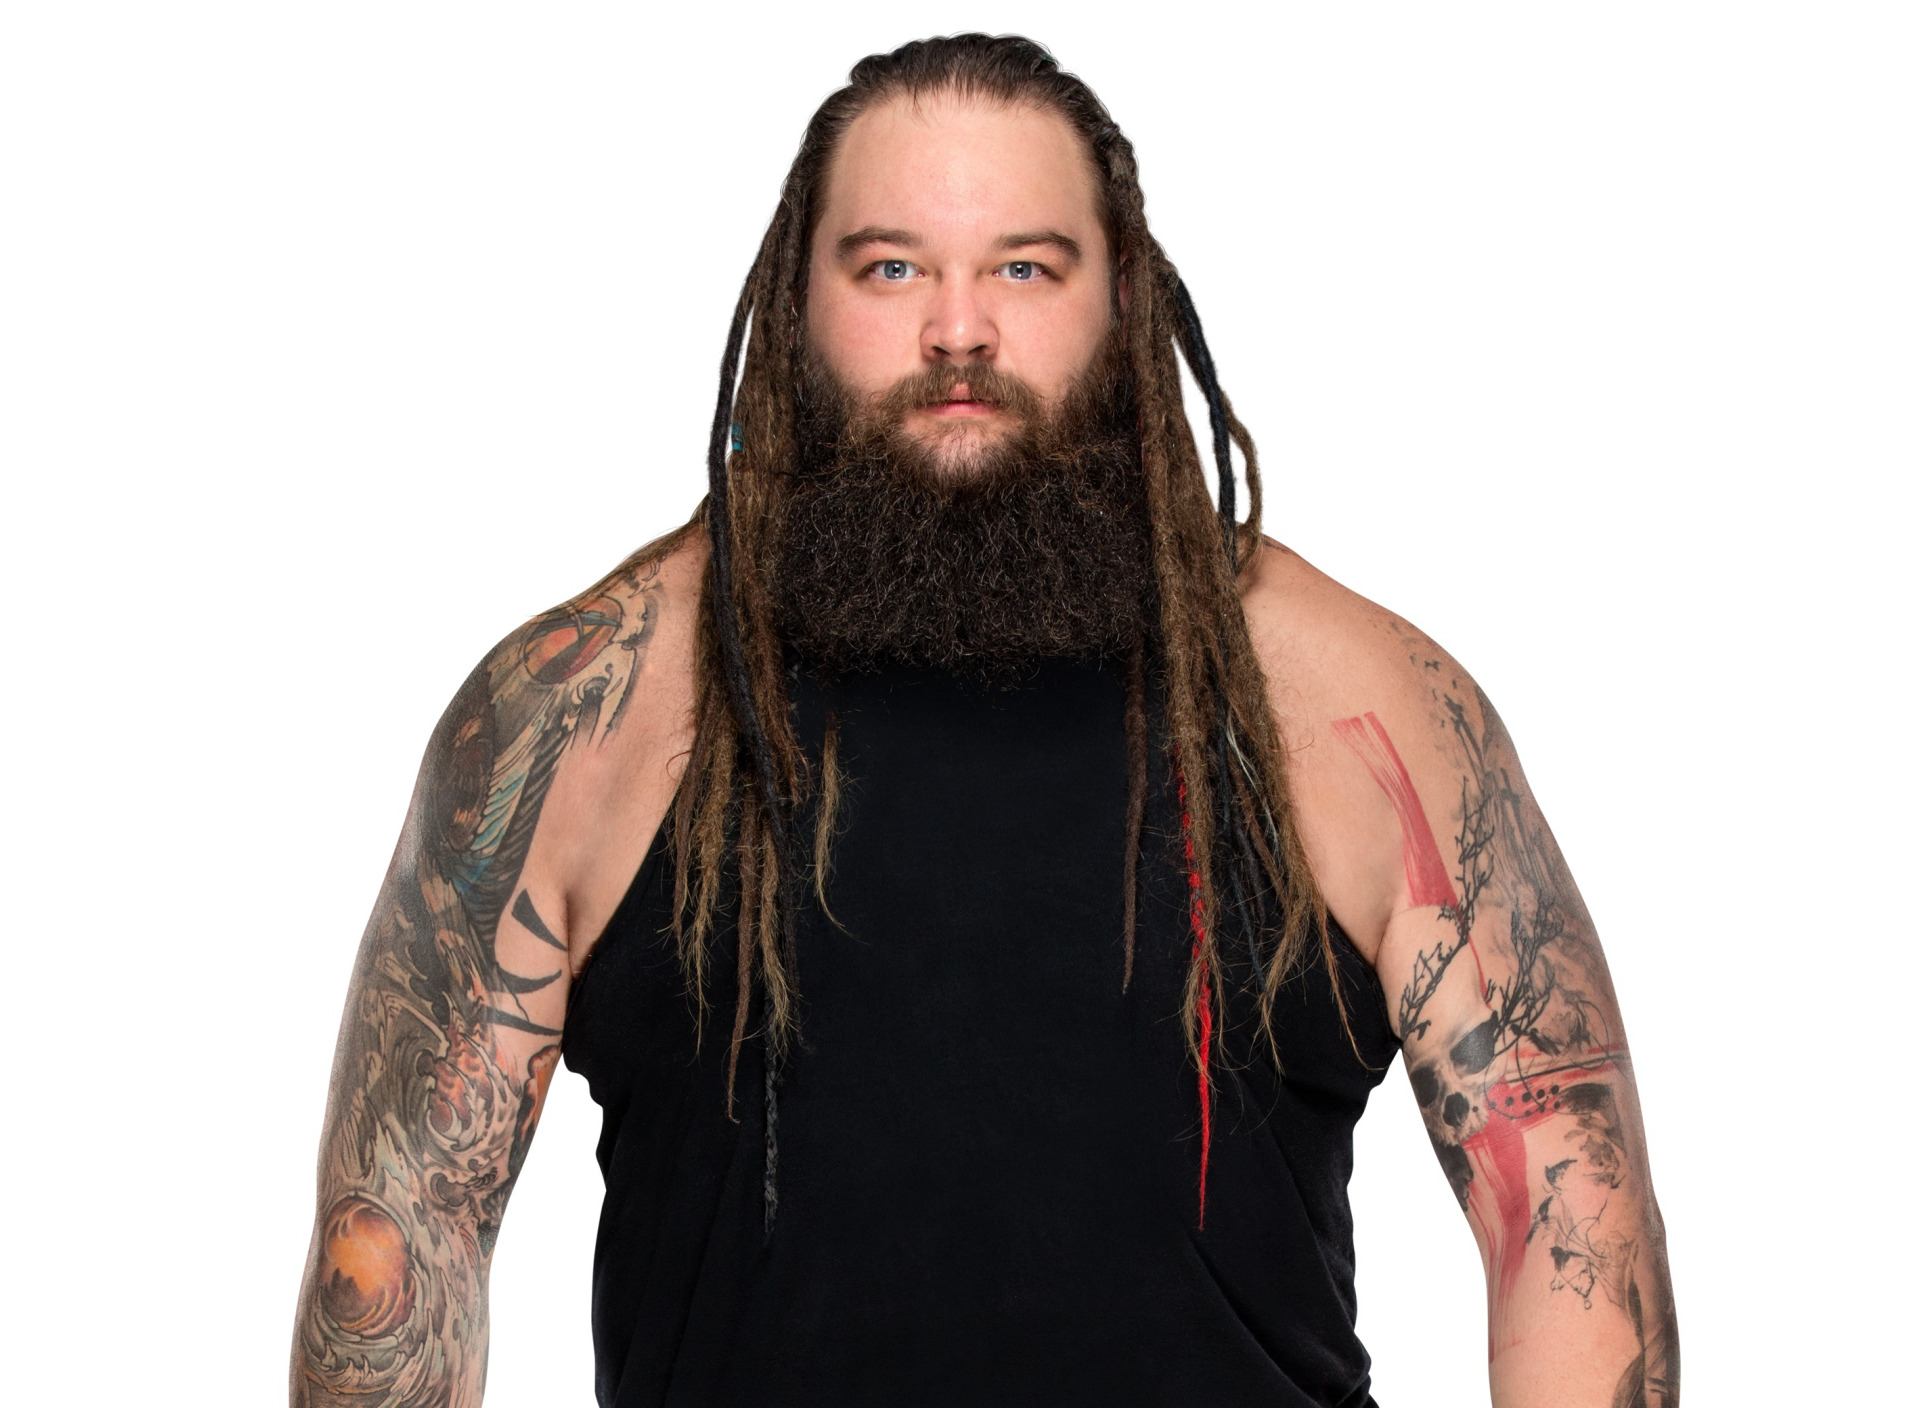 Solid Ref pics of Bray Wyatt's Tattoos? | Wrestlingfigs.com WWE Figure  Forums